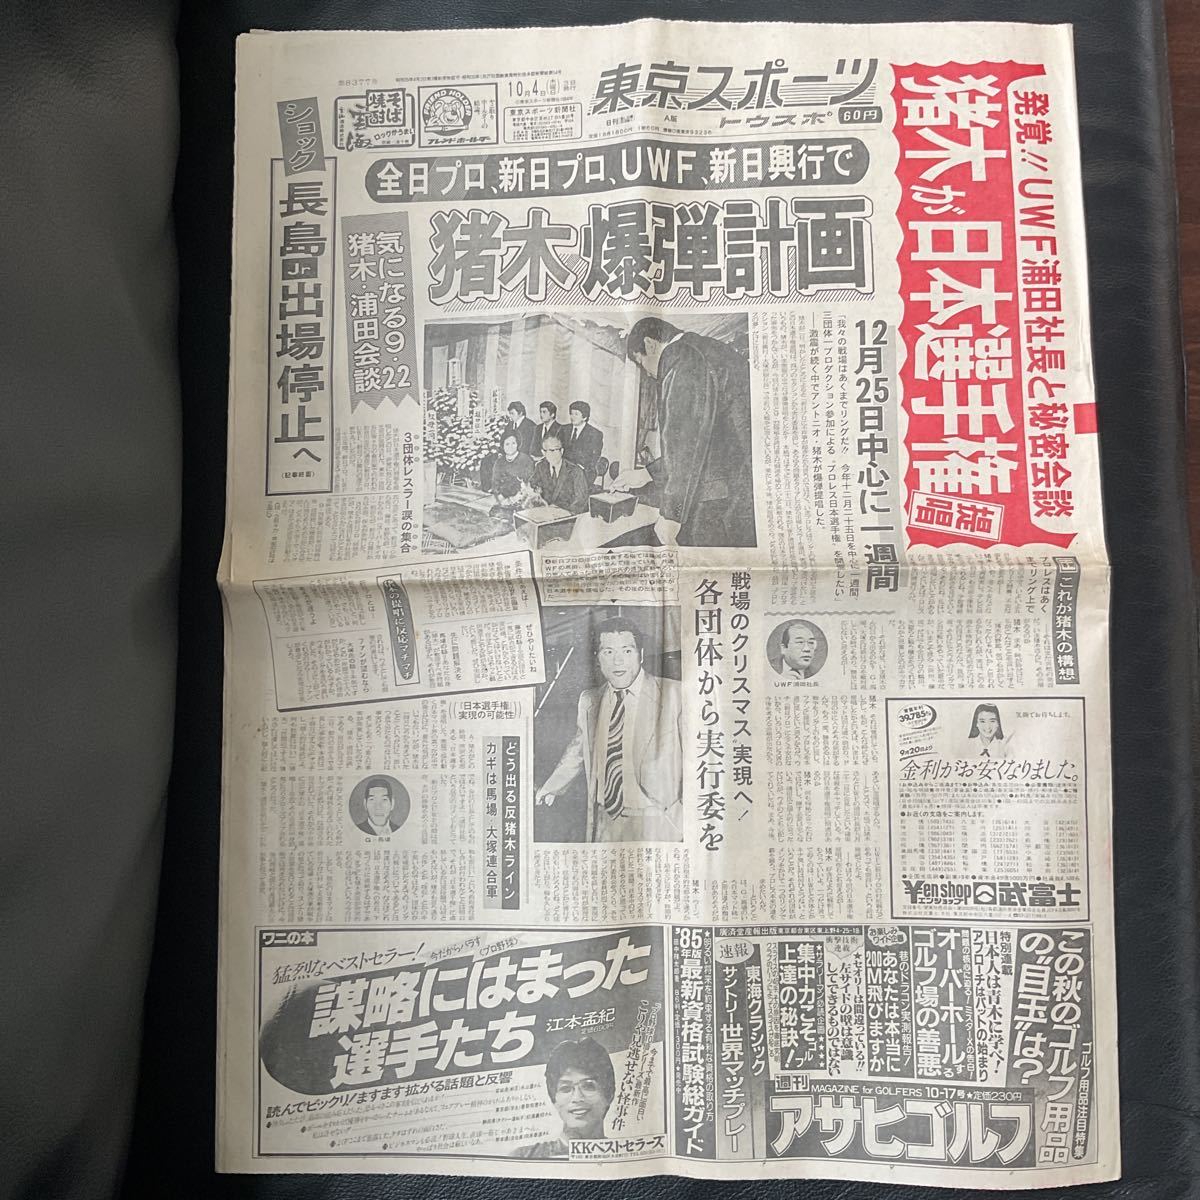  Showa Retro Tokyo спорт Showa 59 год 1984 год 10 месяц 4 Nitto spo . дерево все день Pro новый день Pro UWF новый день . line восток spo старый газета 